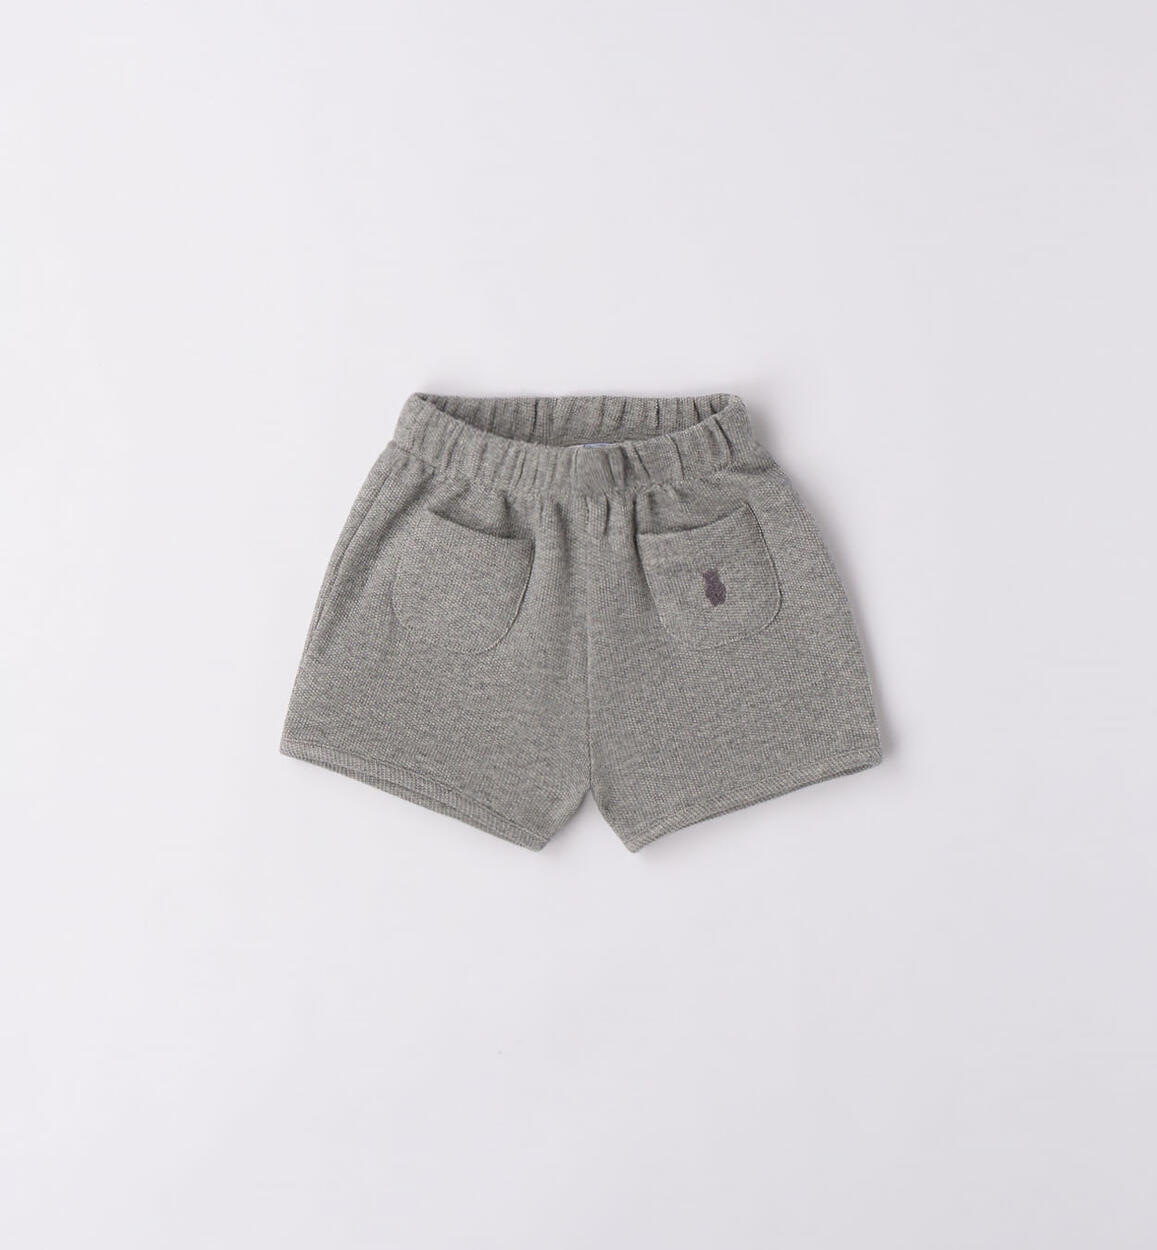 Pantalone corto grigio bimbo GRIGIO Minibanda